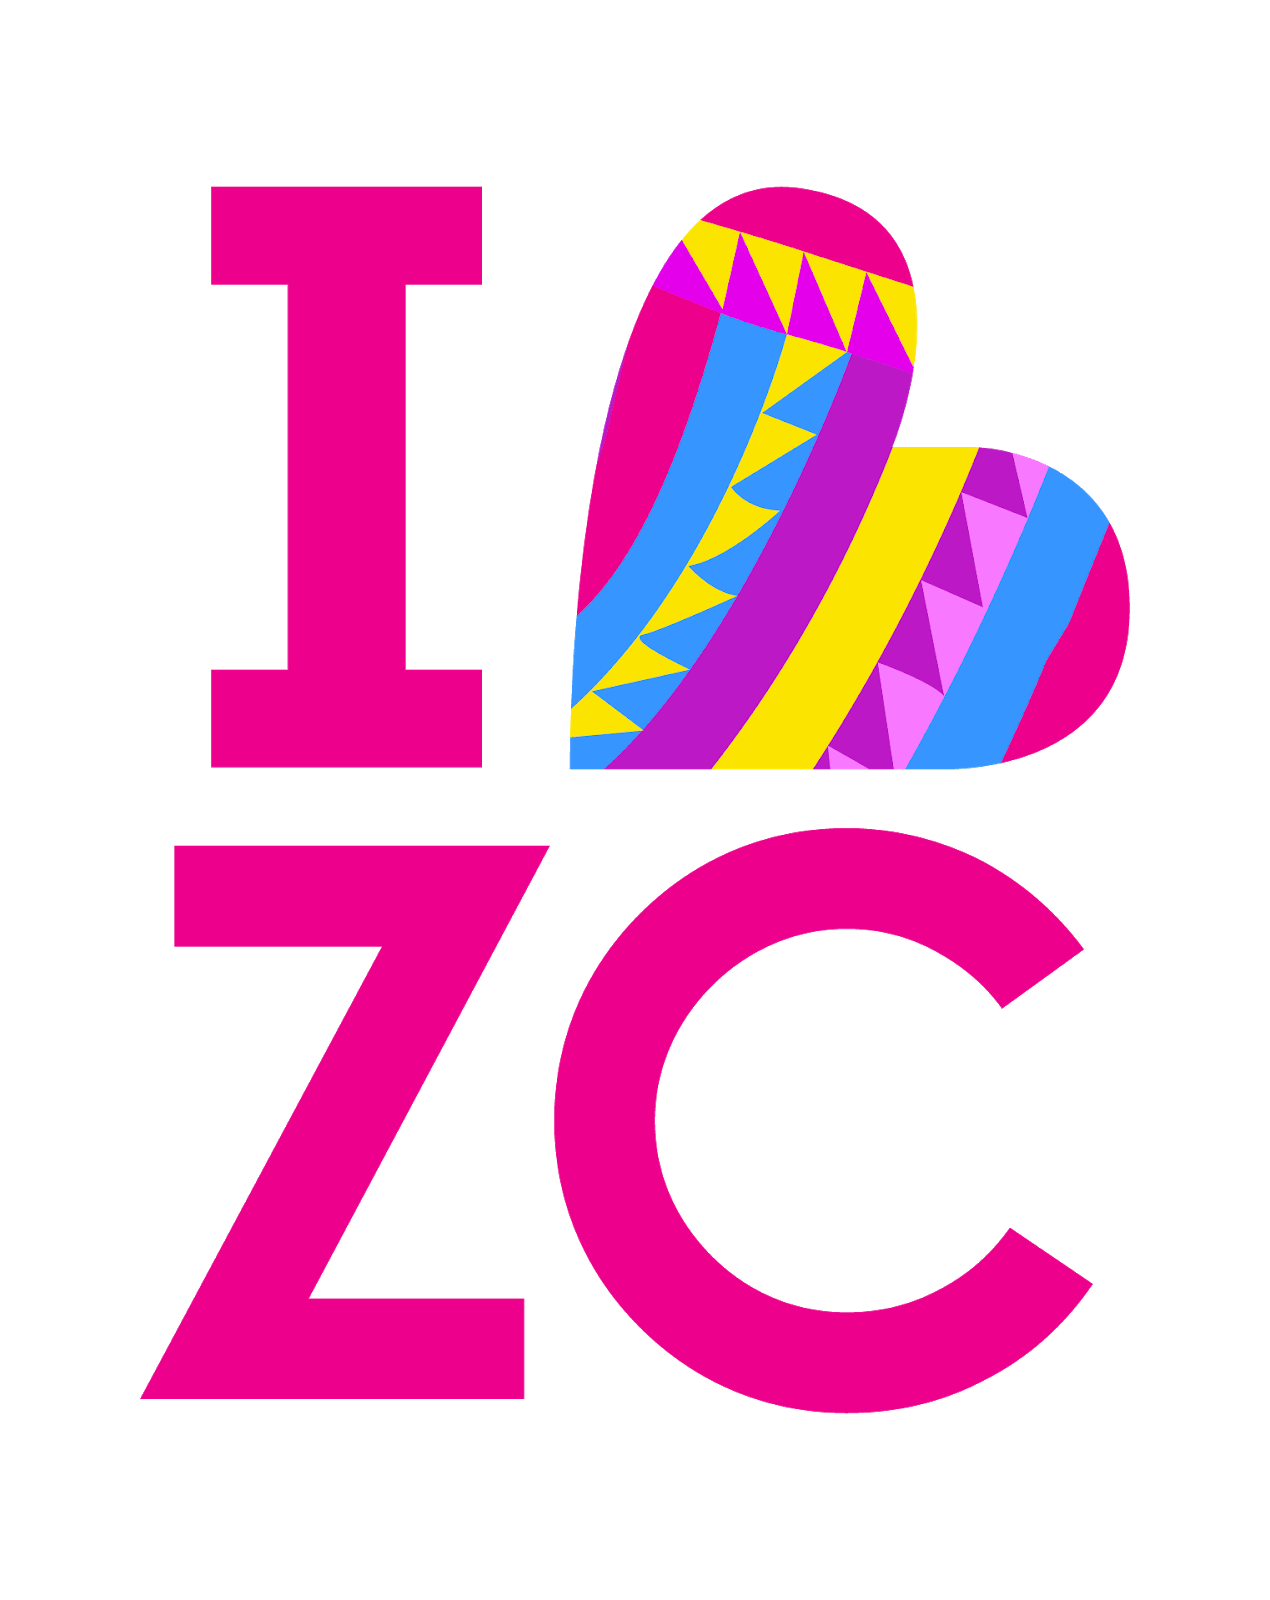 ZC Logo - I Love Zamboanga City Logo - csz97 Blog Folio